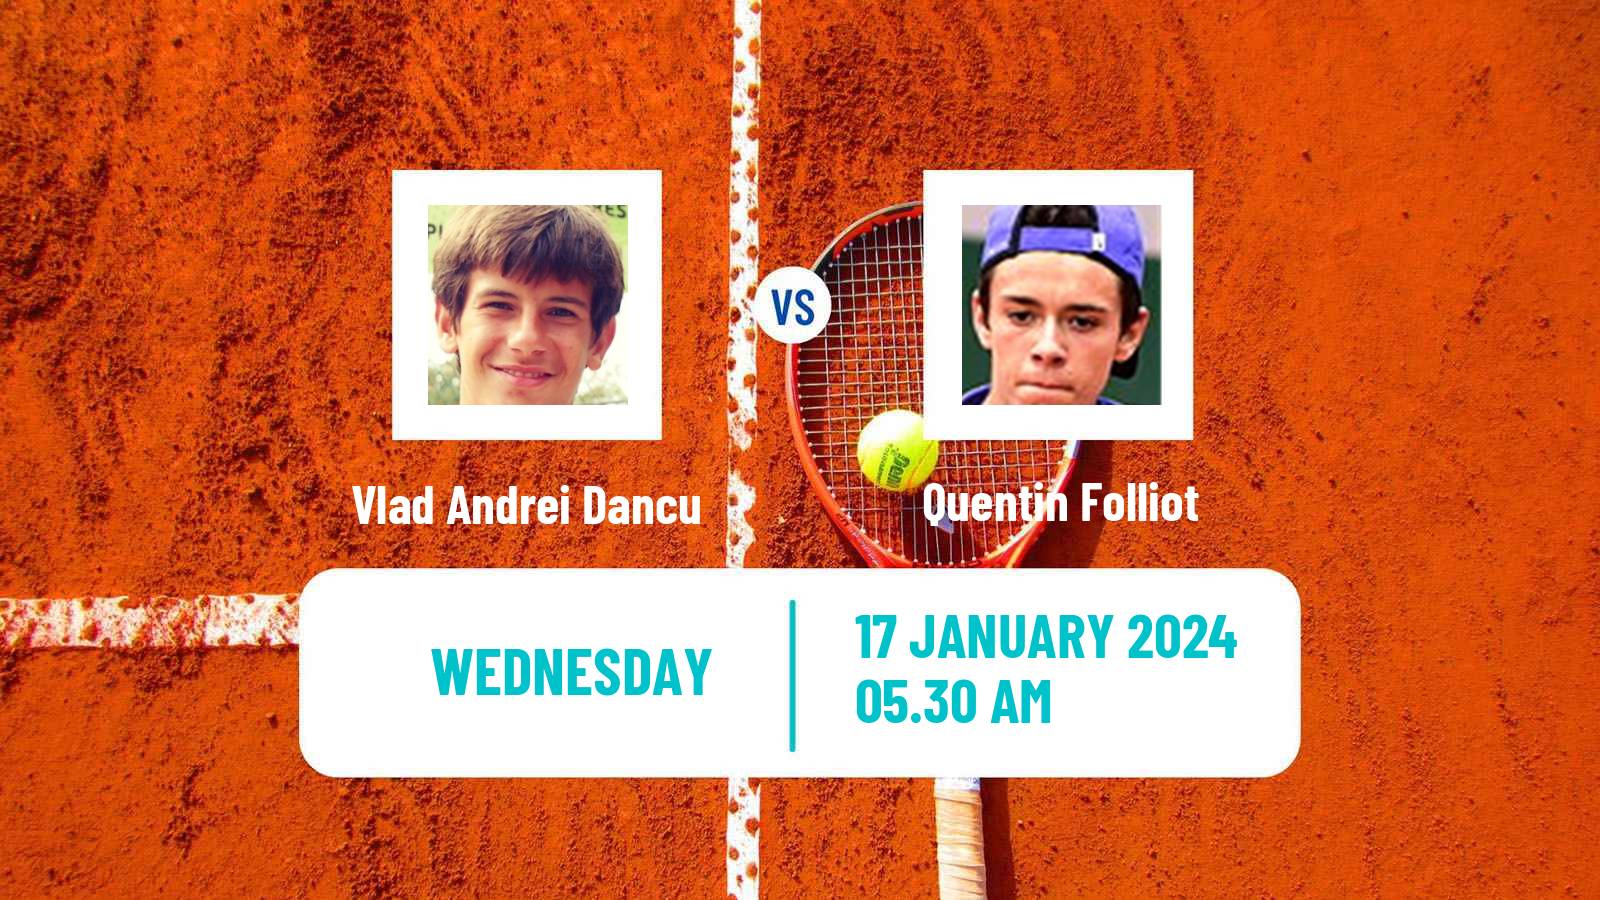 Tennis ITF M15 Antalya 2 Men Vlad Andrei Dancu - Quentin Folliot